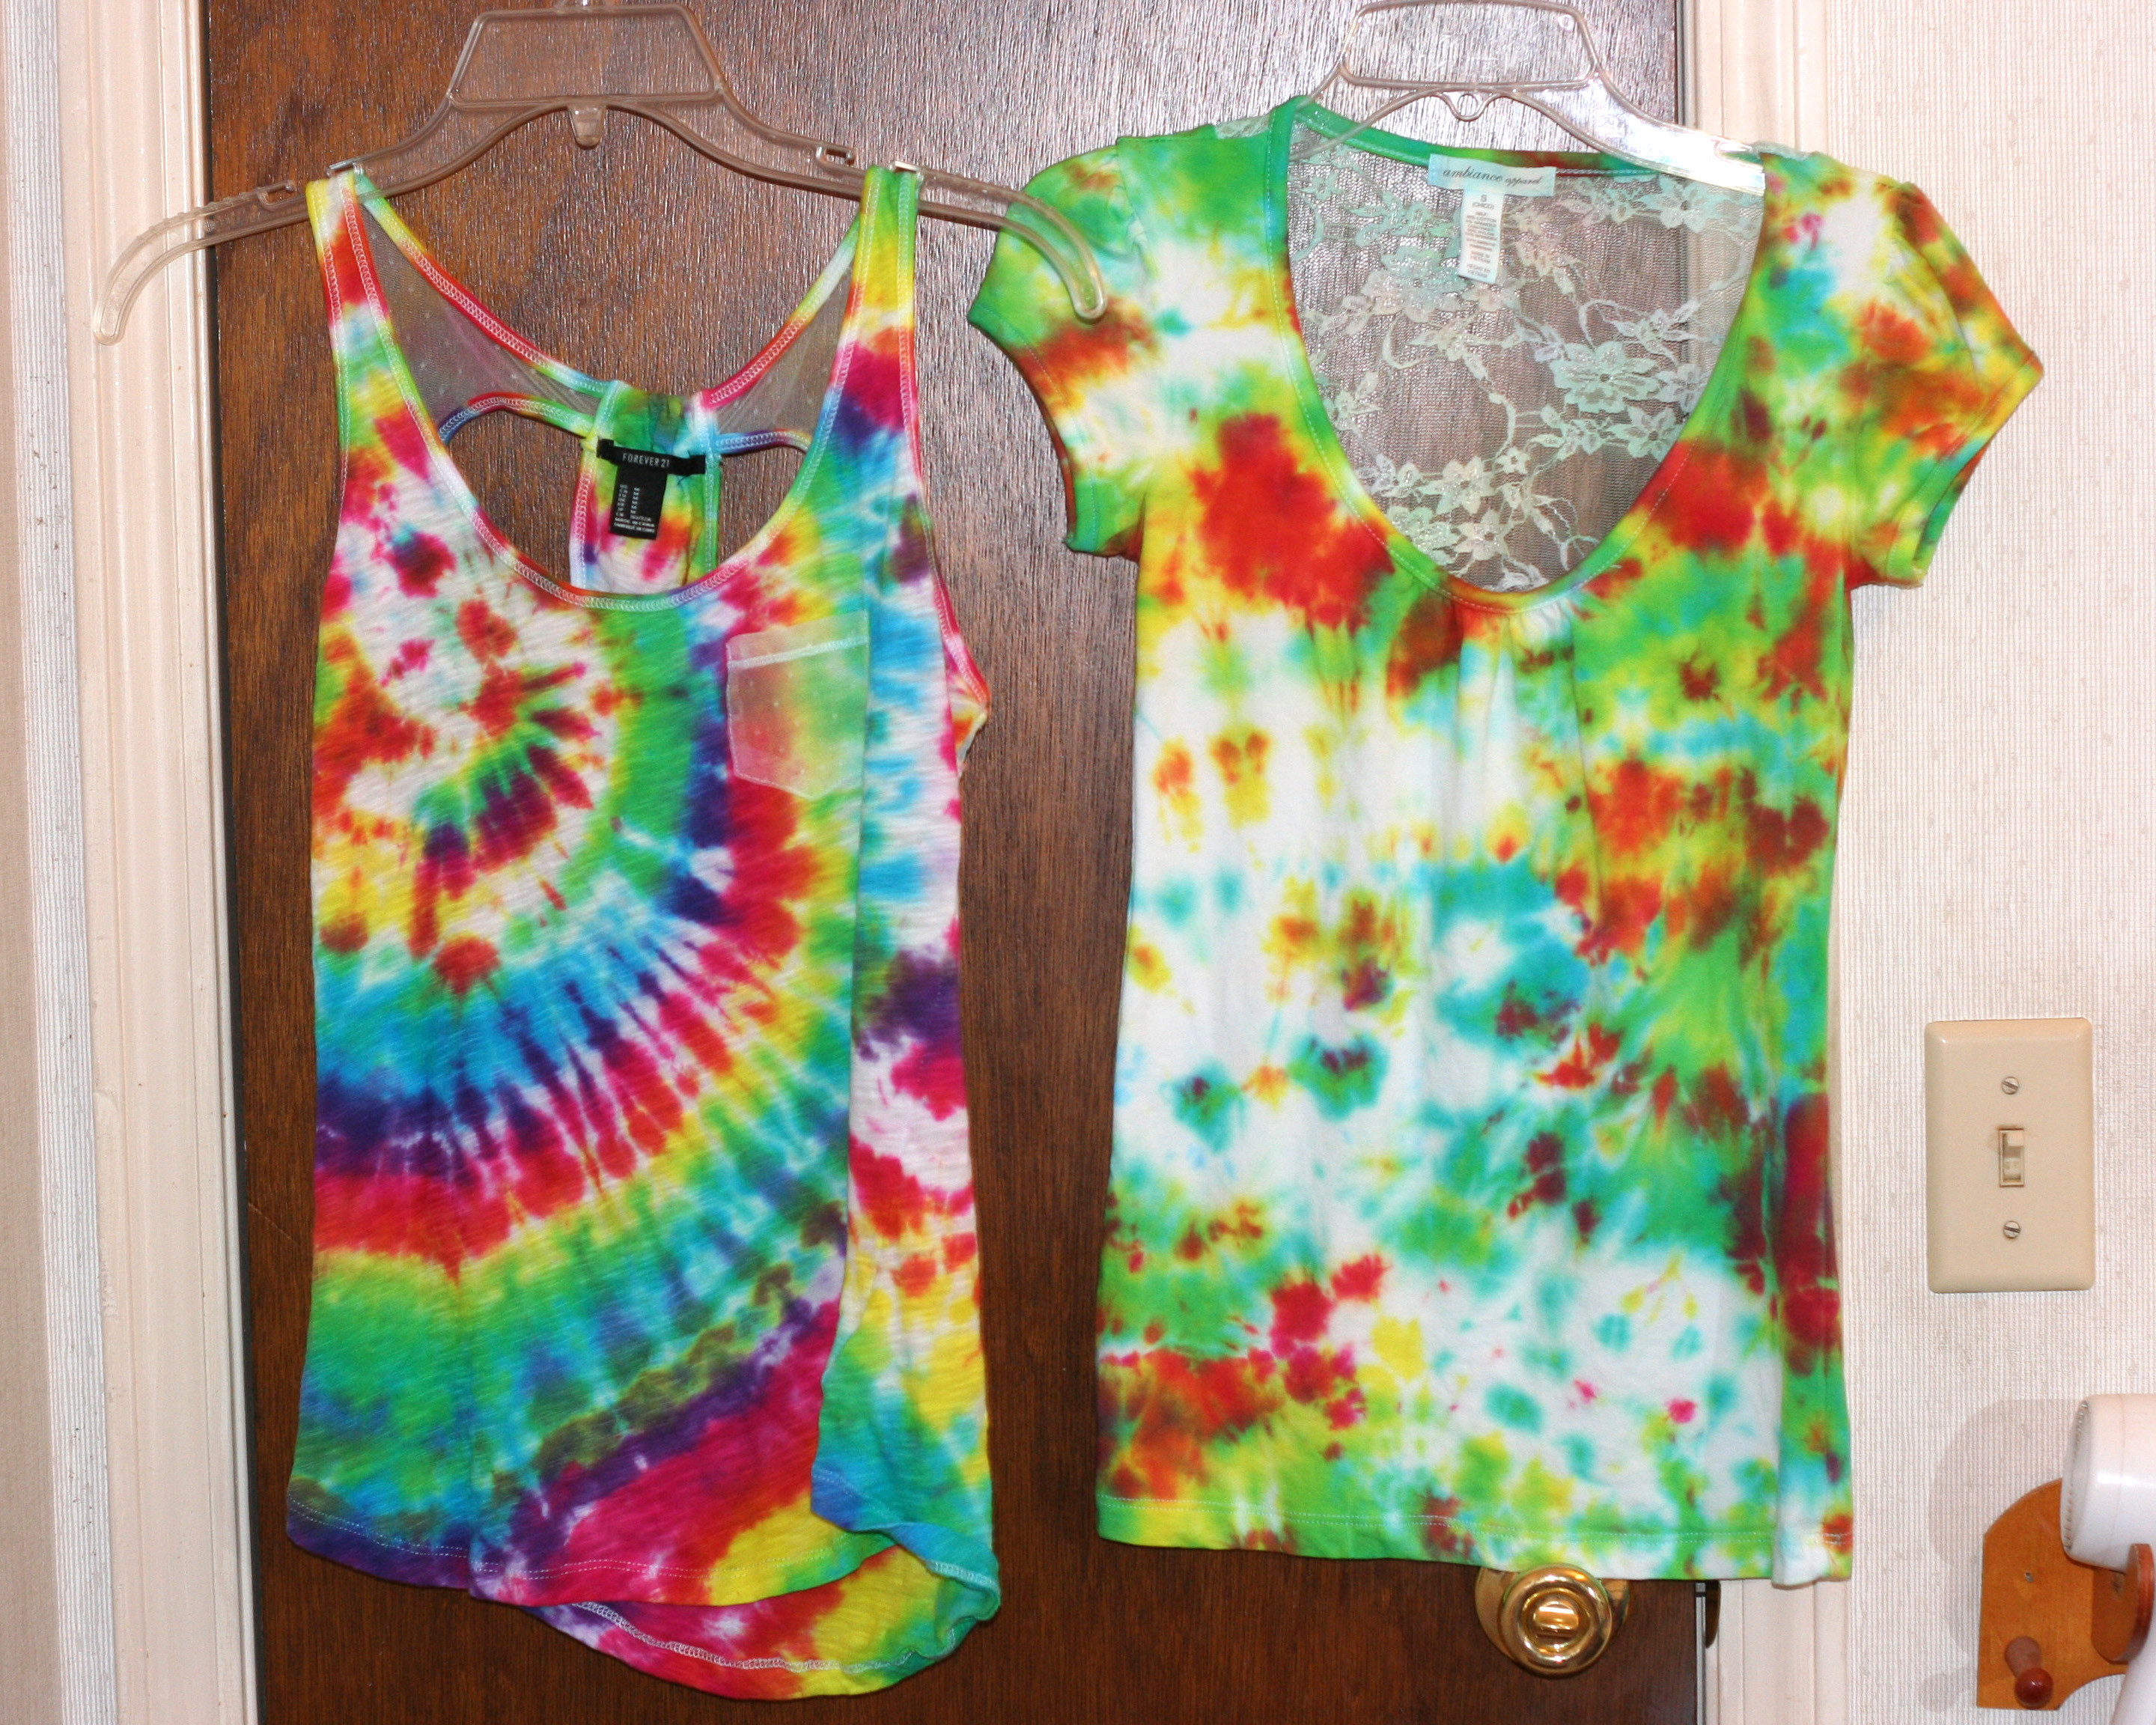 Best ideas about DIY Tie Dye Shirts
. Save or Pin DIY Tie Dye Tutorial Now.